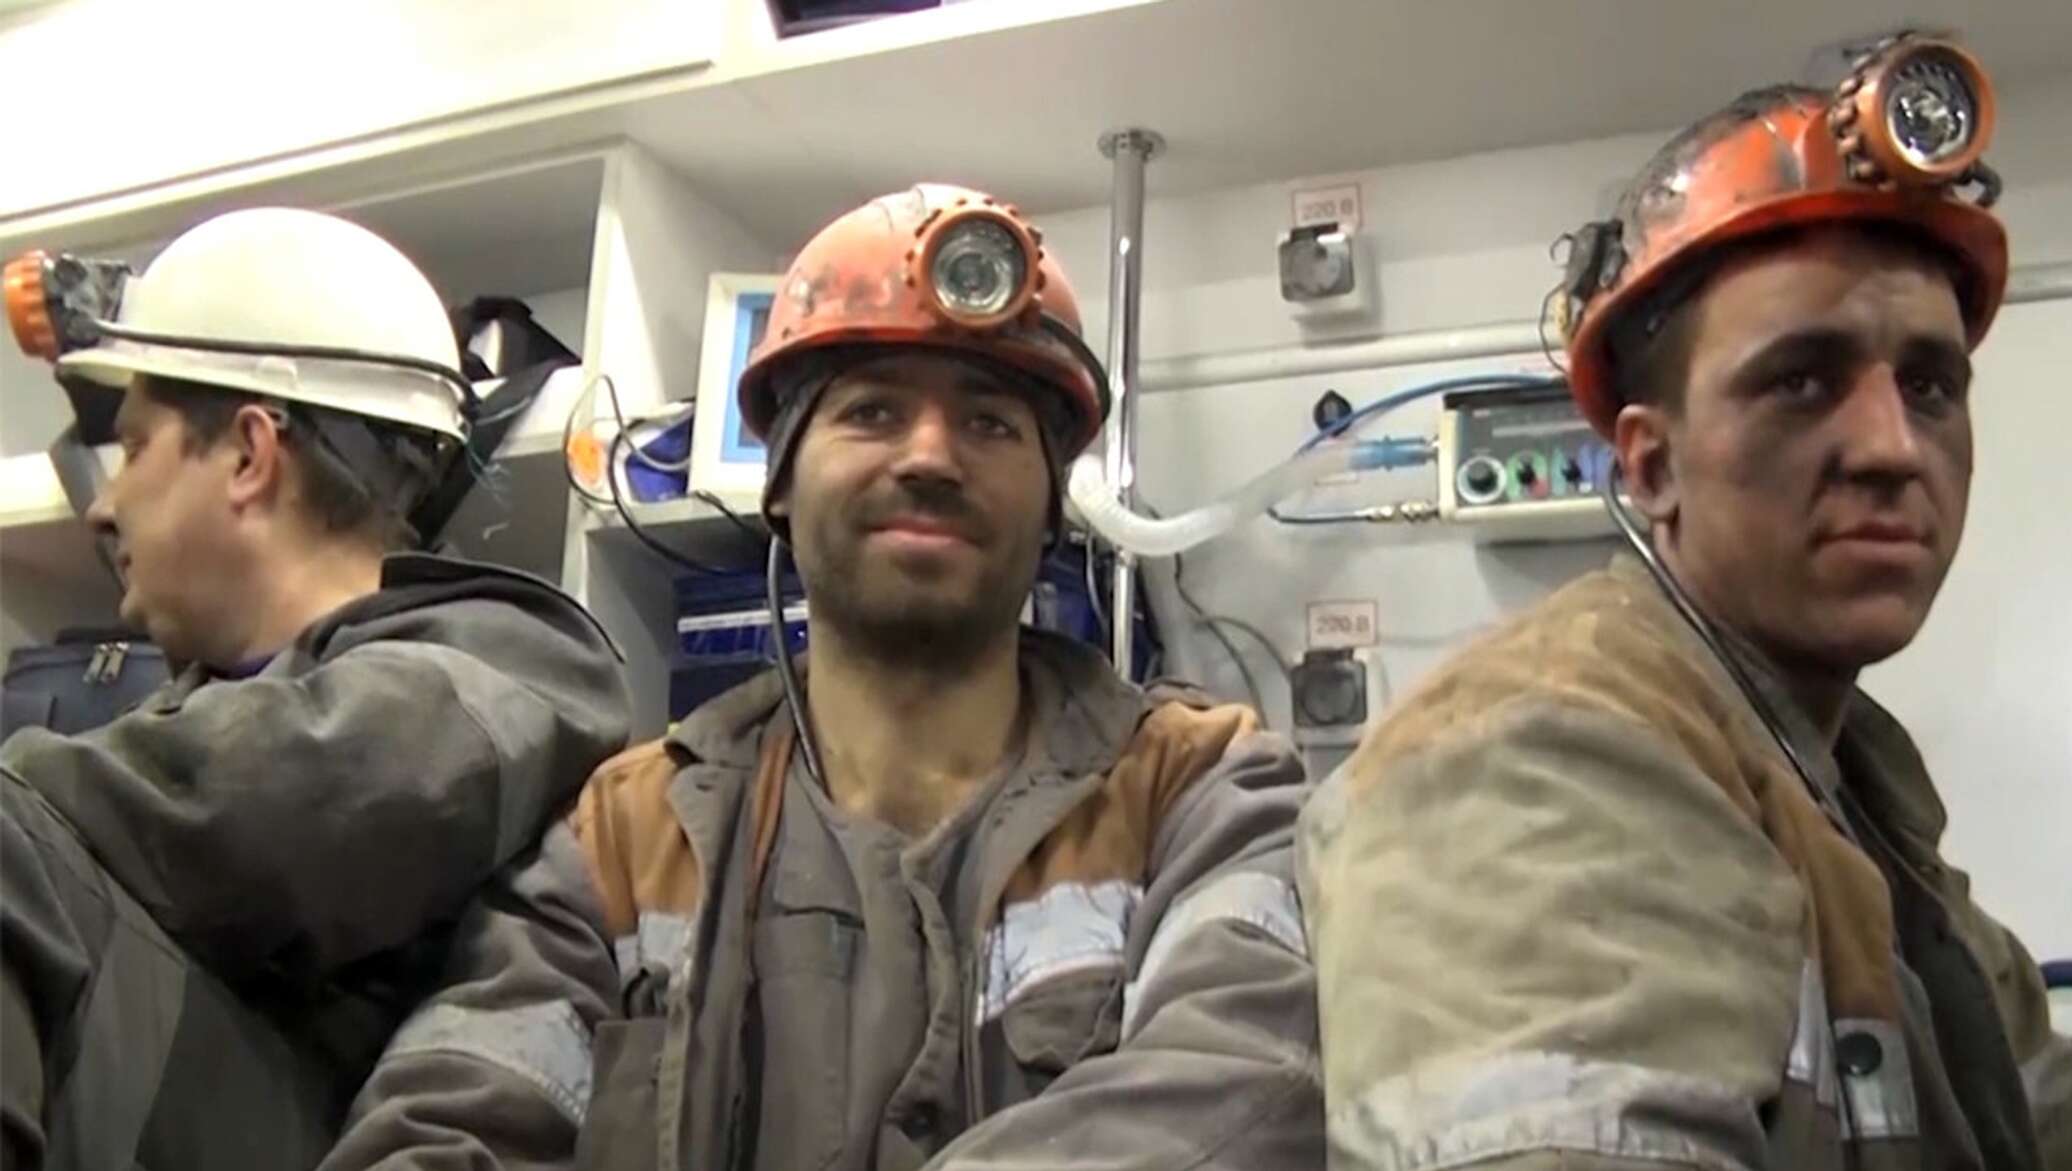 Спасательная операция на шахте пионер